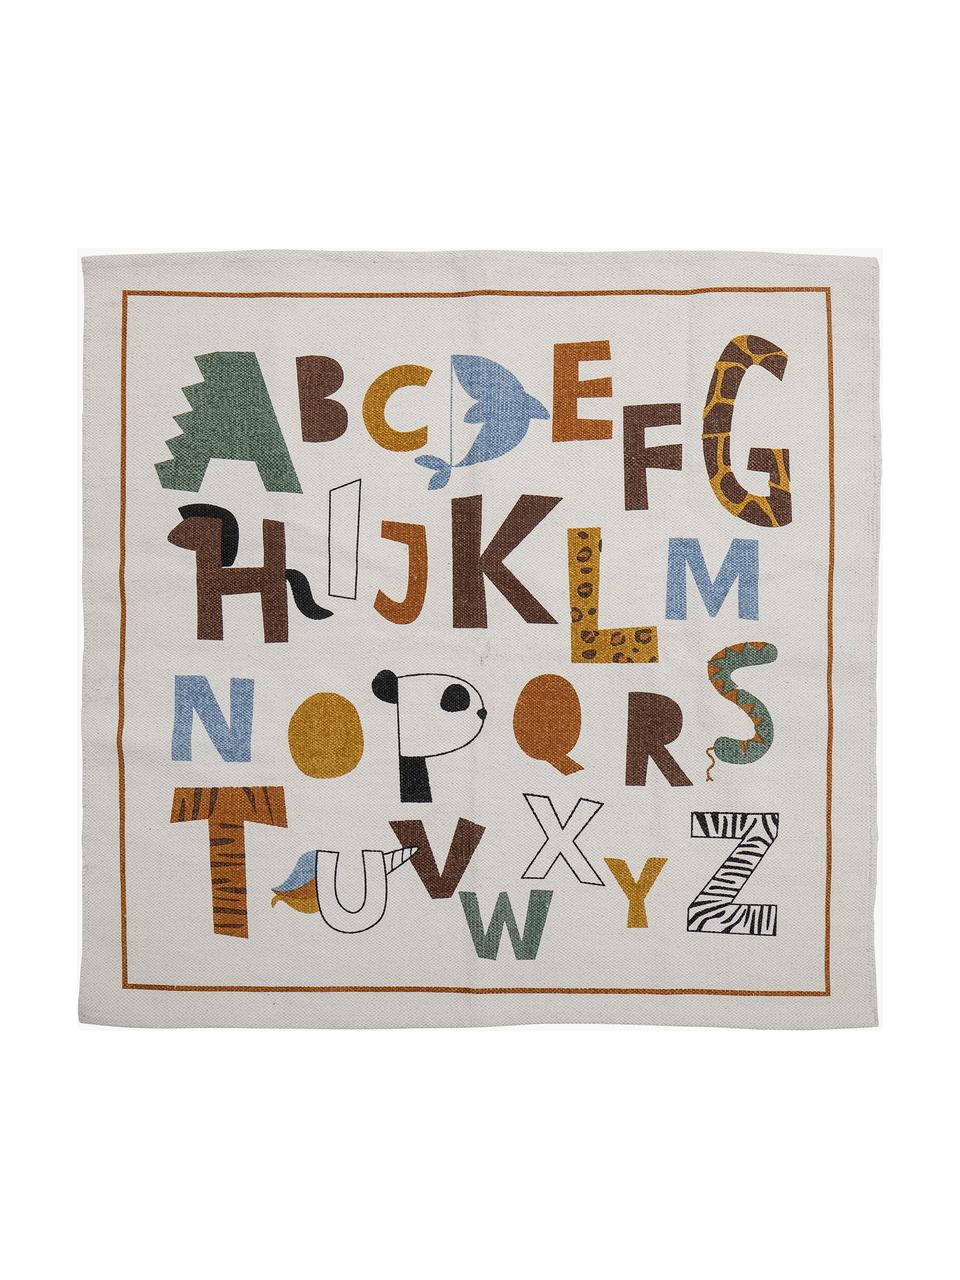 https://static.westwingnow.de/image/upload/seo/t_default.pdp_seo/simple/94/1002/2071298/Tappeto-per-bambini-con-stampa-alfabeto-colorato-Memmo.jpg